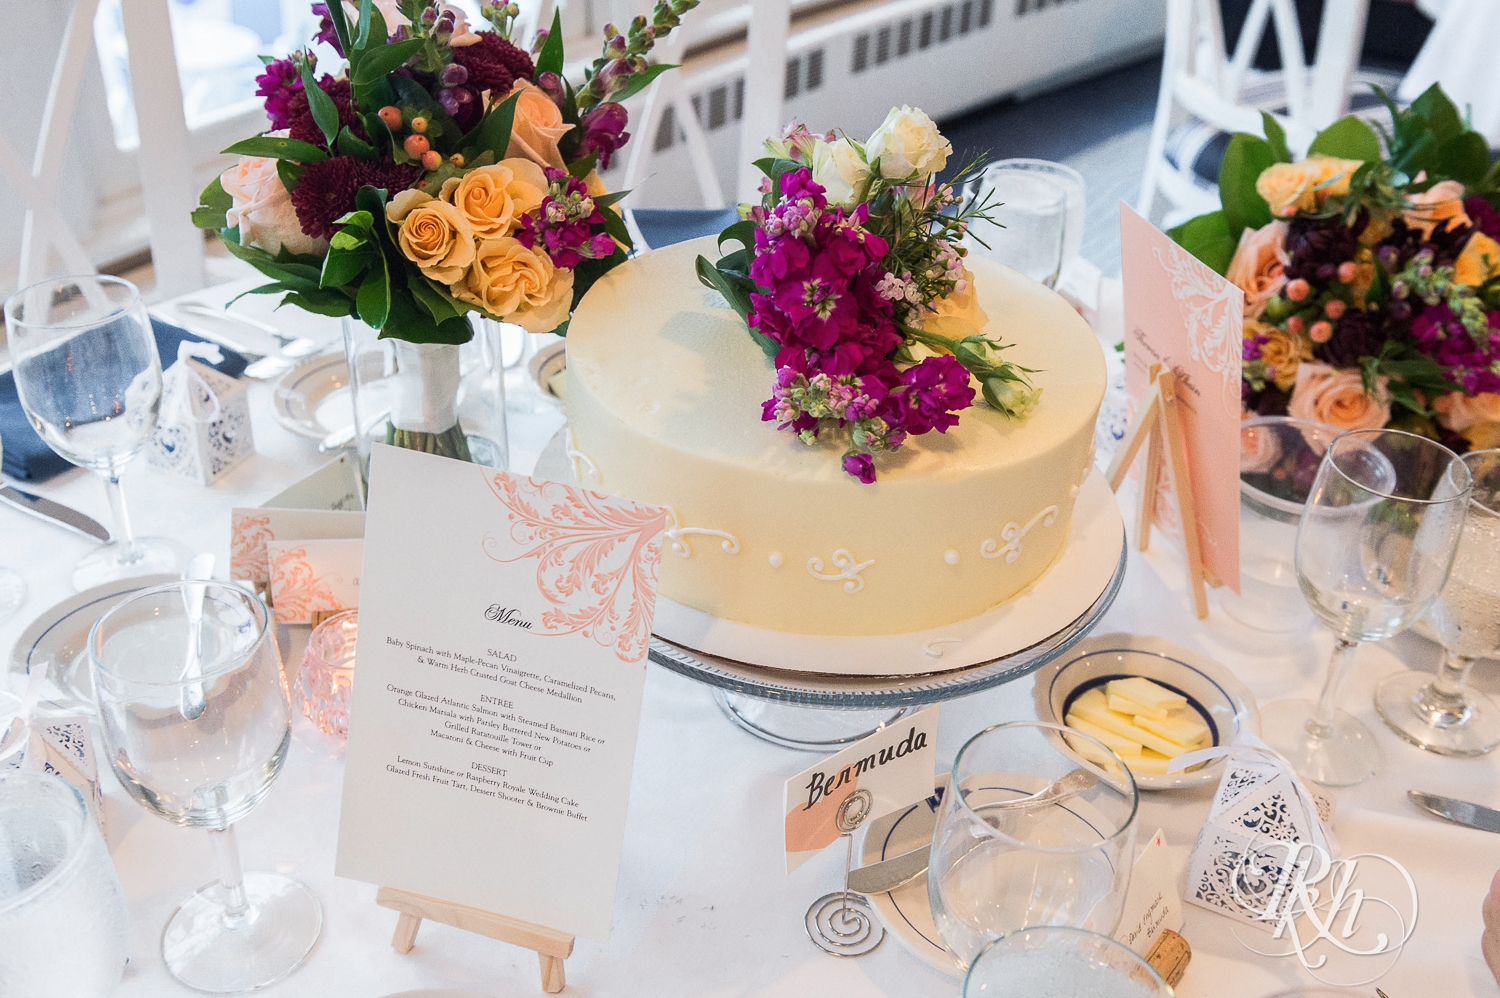 Wedding cake on table at White Bear Yacht Club in White Bear Lake, Minnesota.